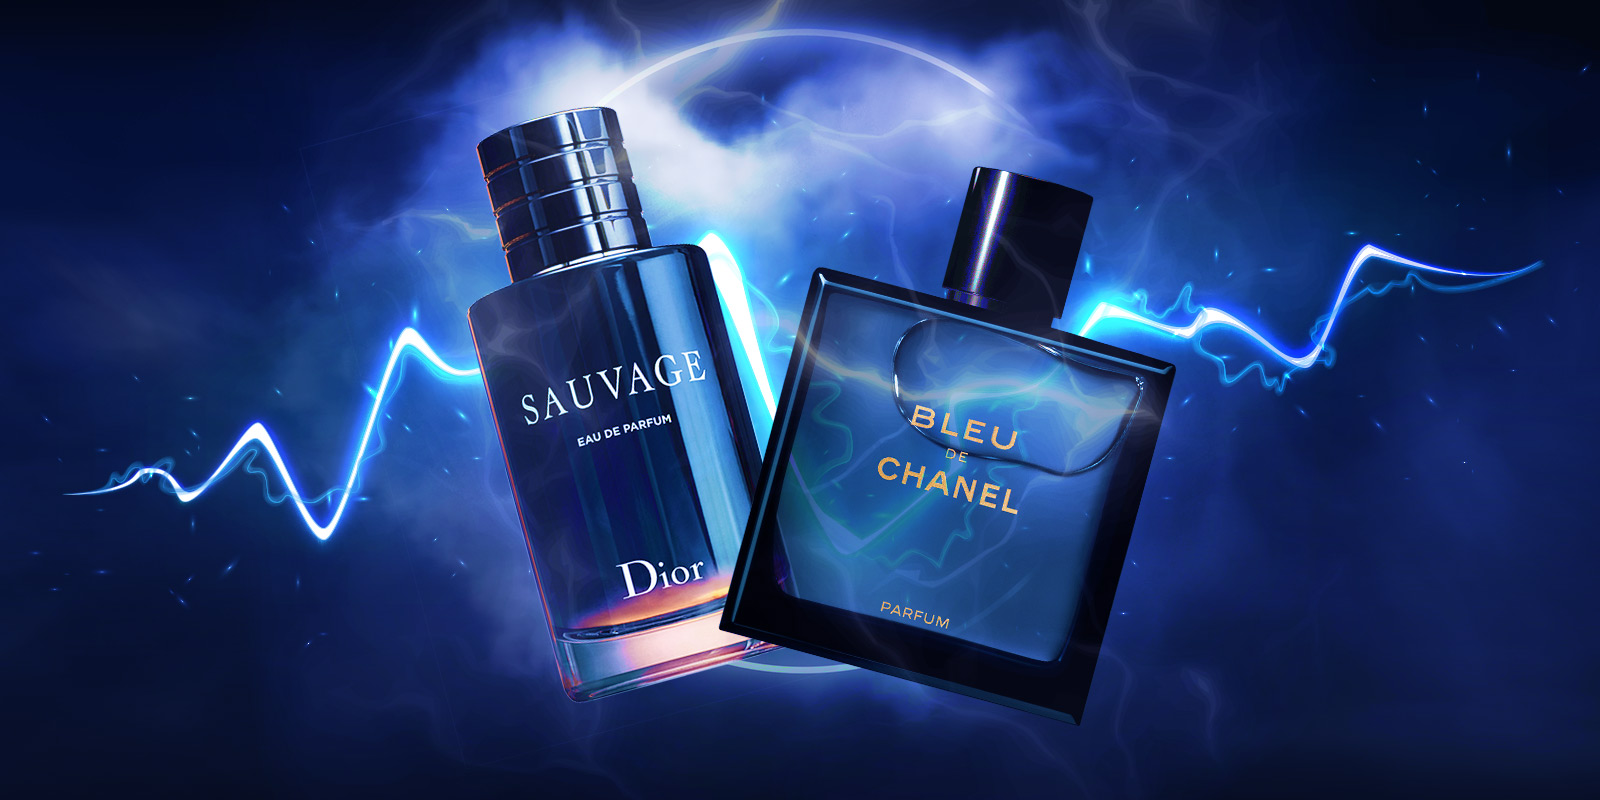 blue chanel perfume for women